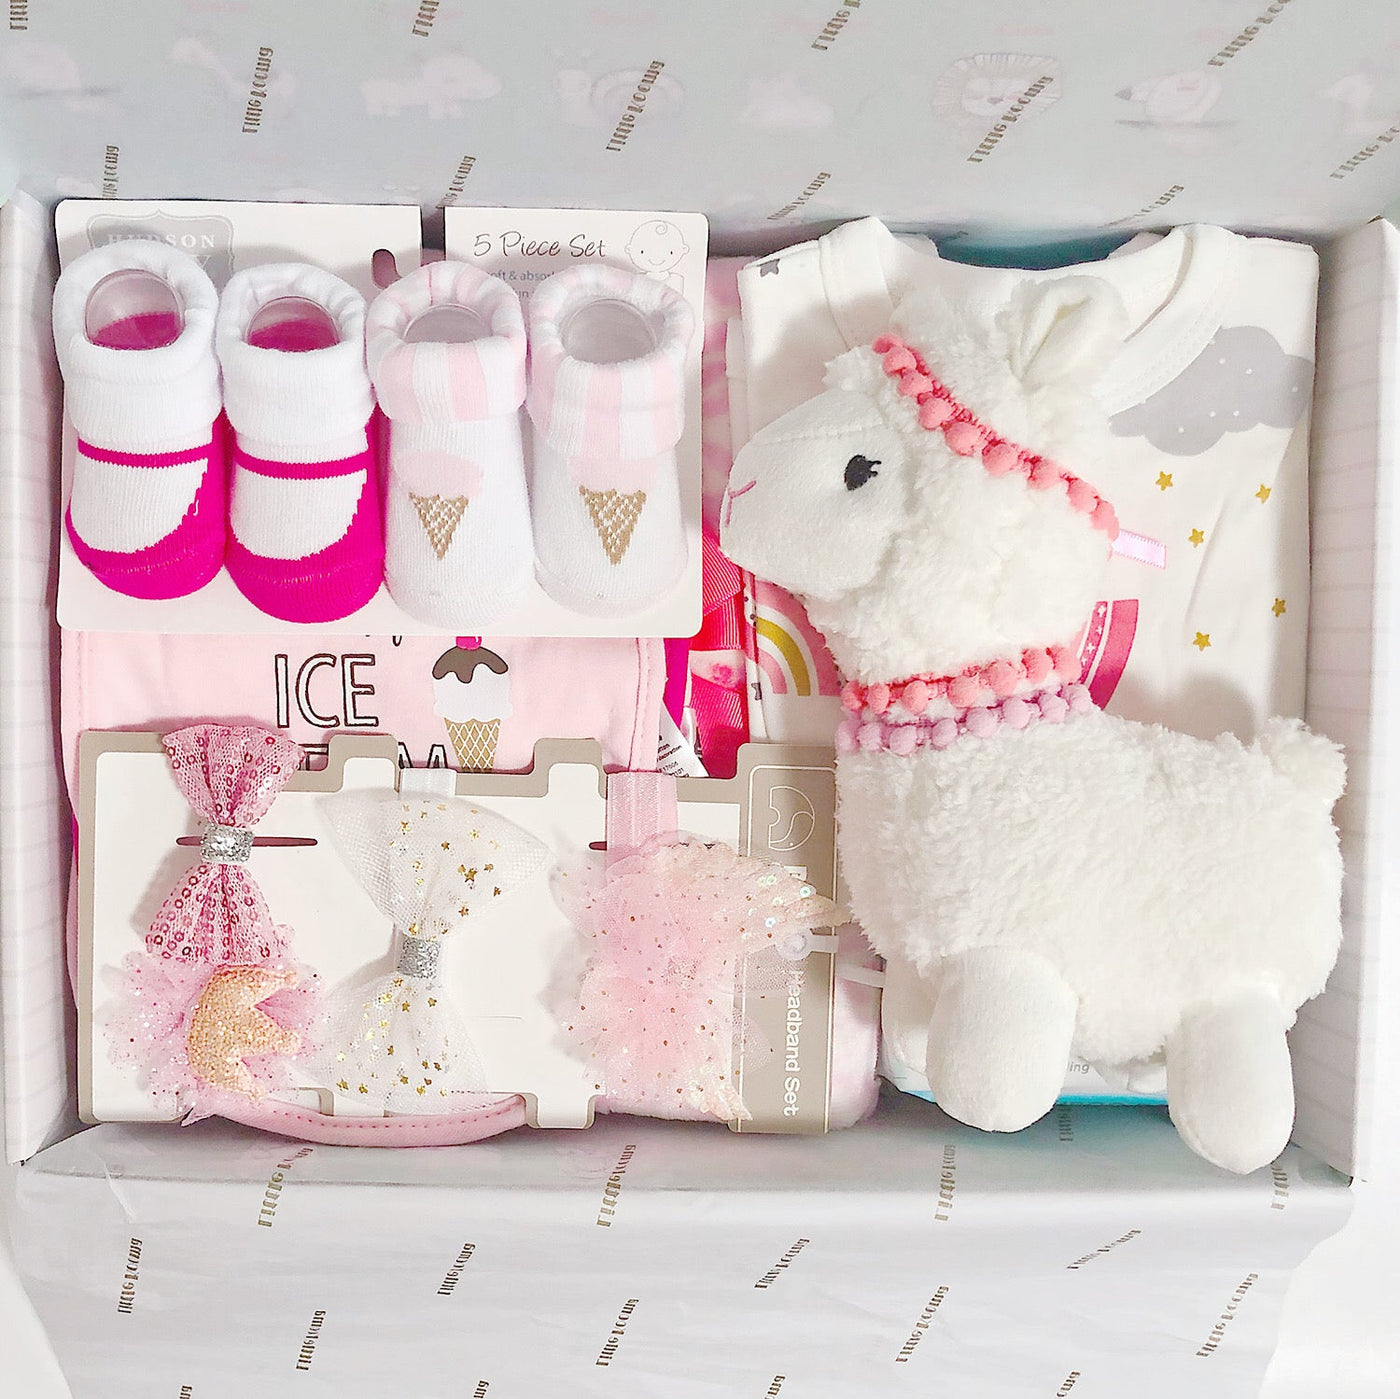 New Born Baby Girl Little Kooma Brand Gift Box 15 Pcs Llama Set 2022 - Little Kooma